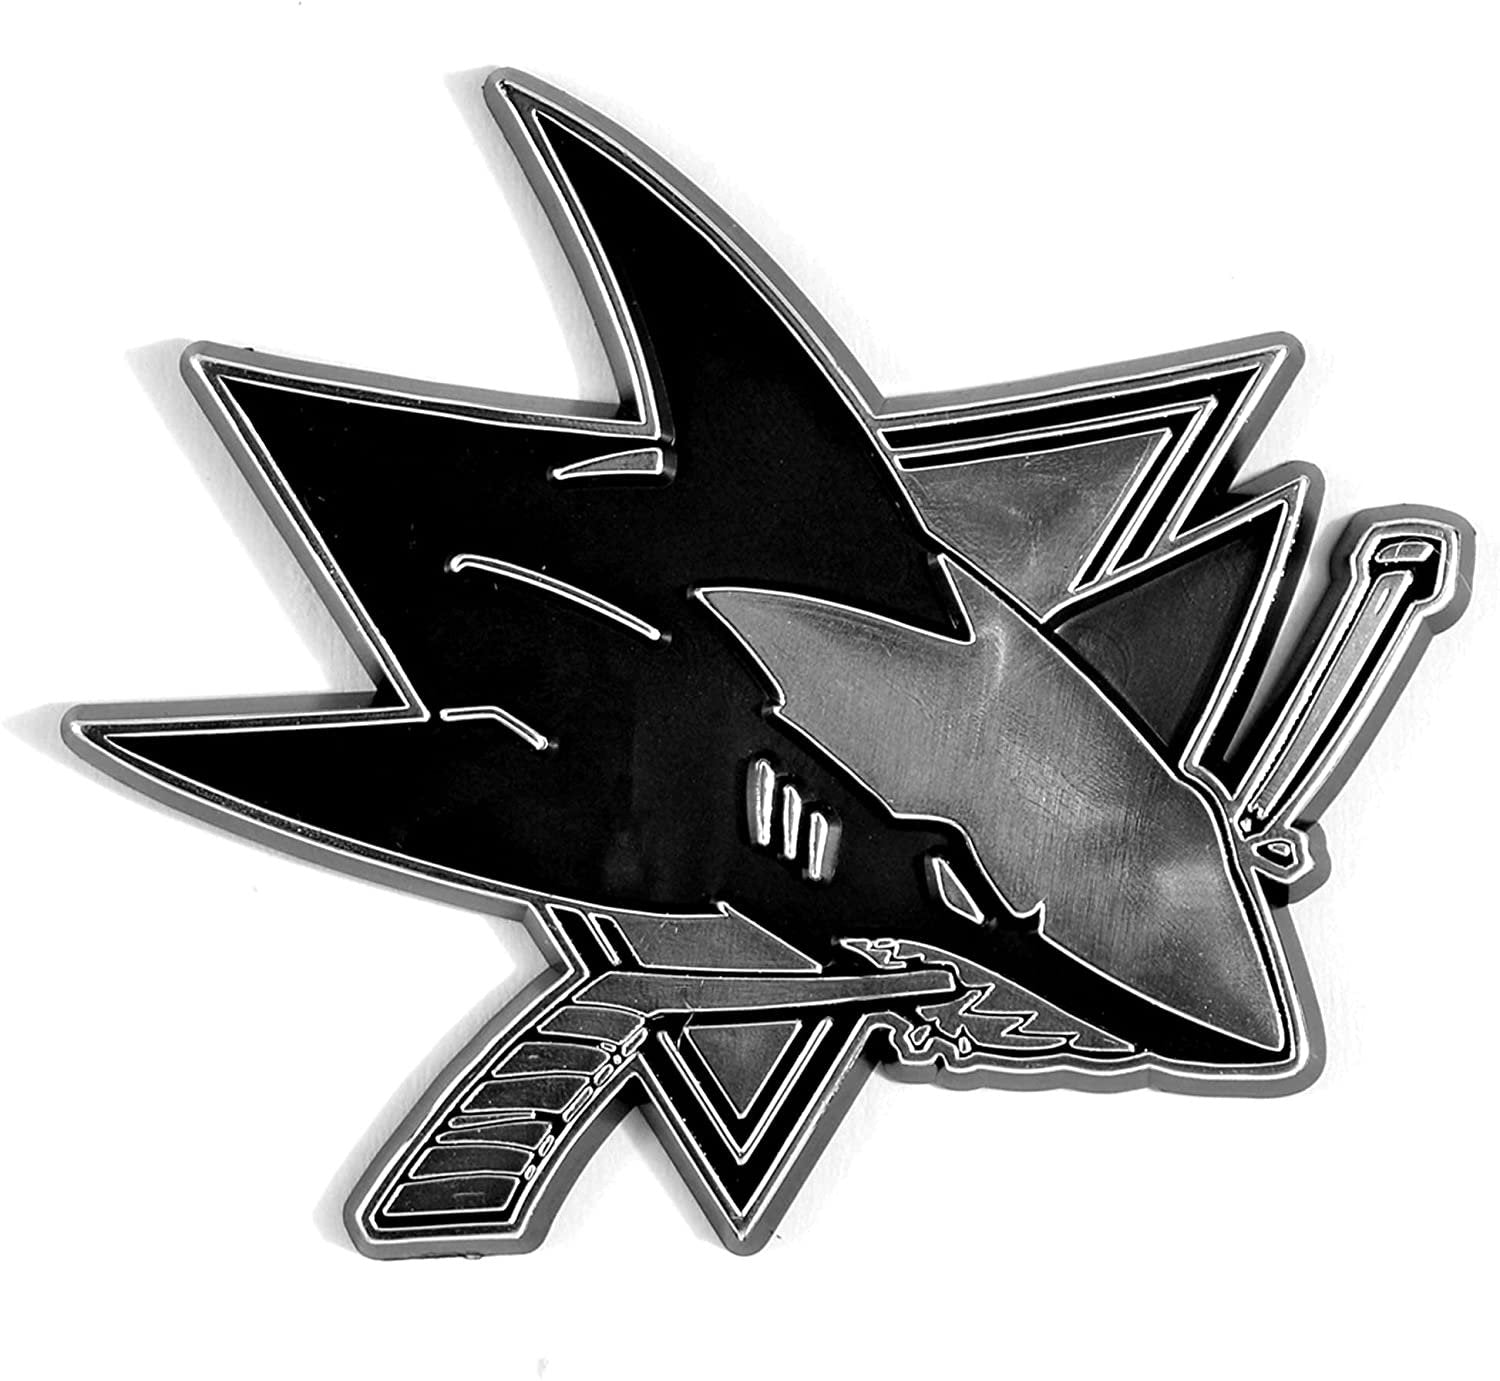 San Jose Sharks Auto Emblem, Plastic Molded, Silver Chrome Color, Raised 3D Effect, Adhesive Backing